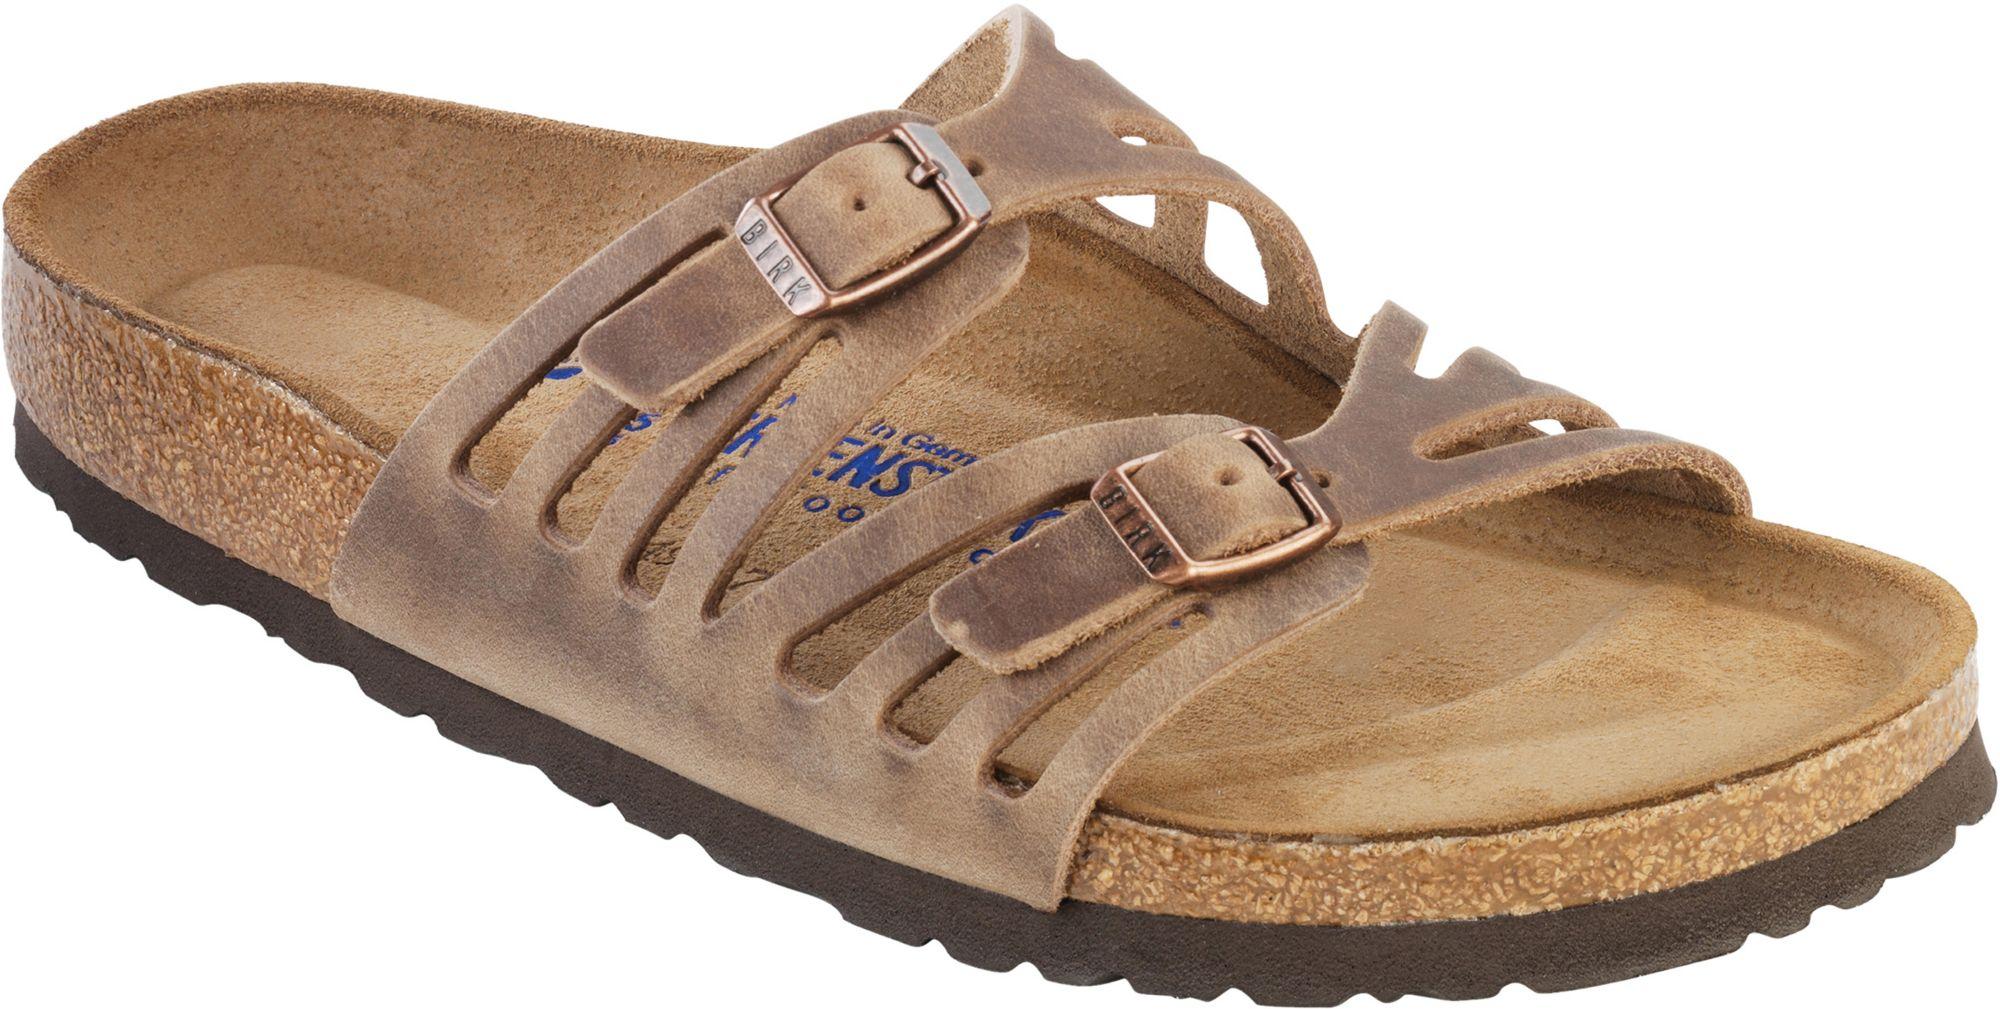 Birkenstock Leather Granada Soft Footbed Sandals in Tobacco (Brown) - Lyst